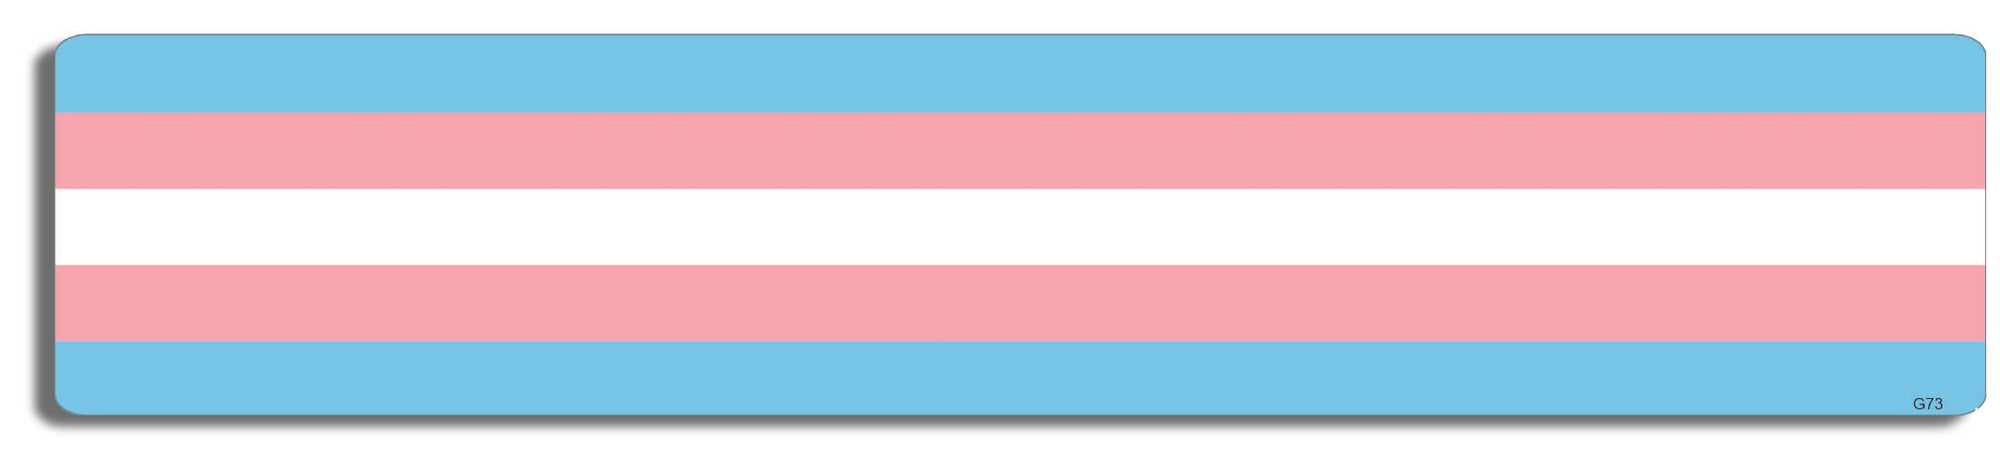 Transexual Skinny Flag - 2" x 10" -  Decal Bumper Sticker-LGBT Bumper Sticker Car Magnet Transexual Skinny Flag-  Decal for carsgay, lgbtq, pride, trans, transgender